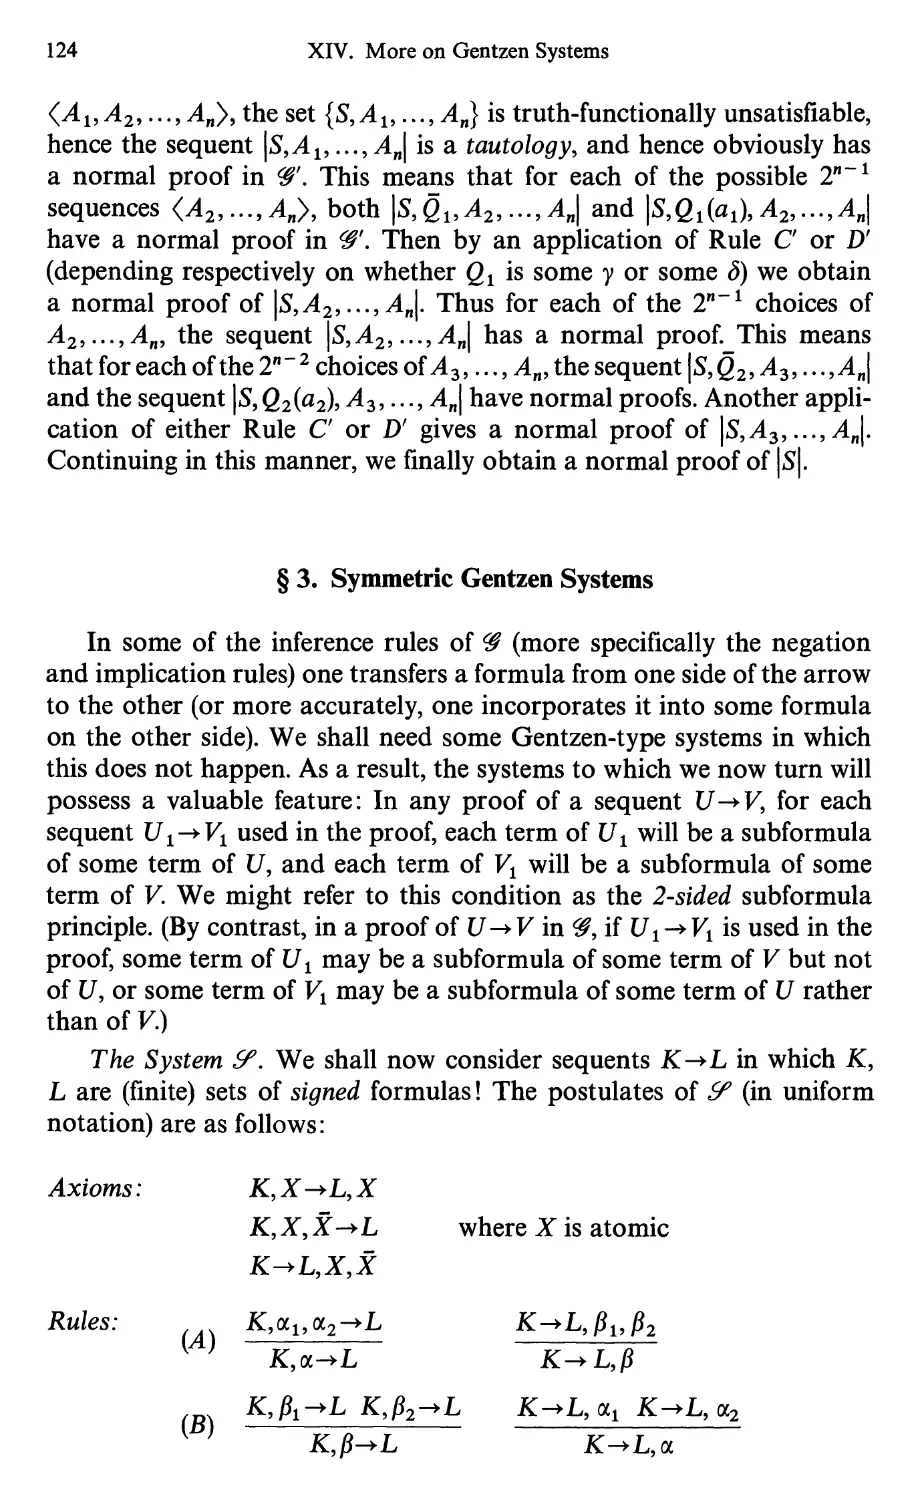 14.3 Symmetric Gentzen Systems